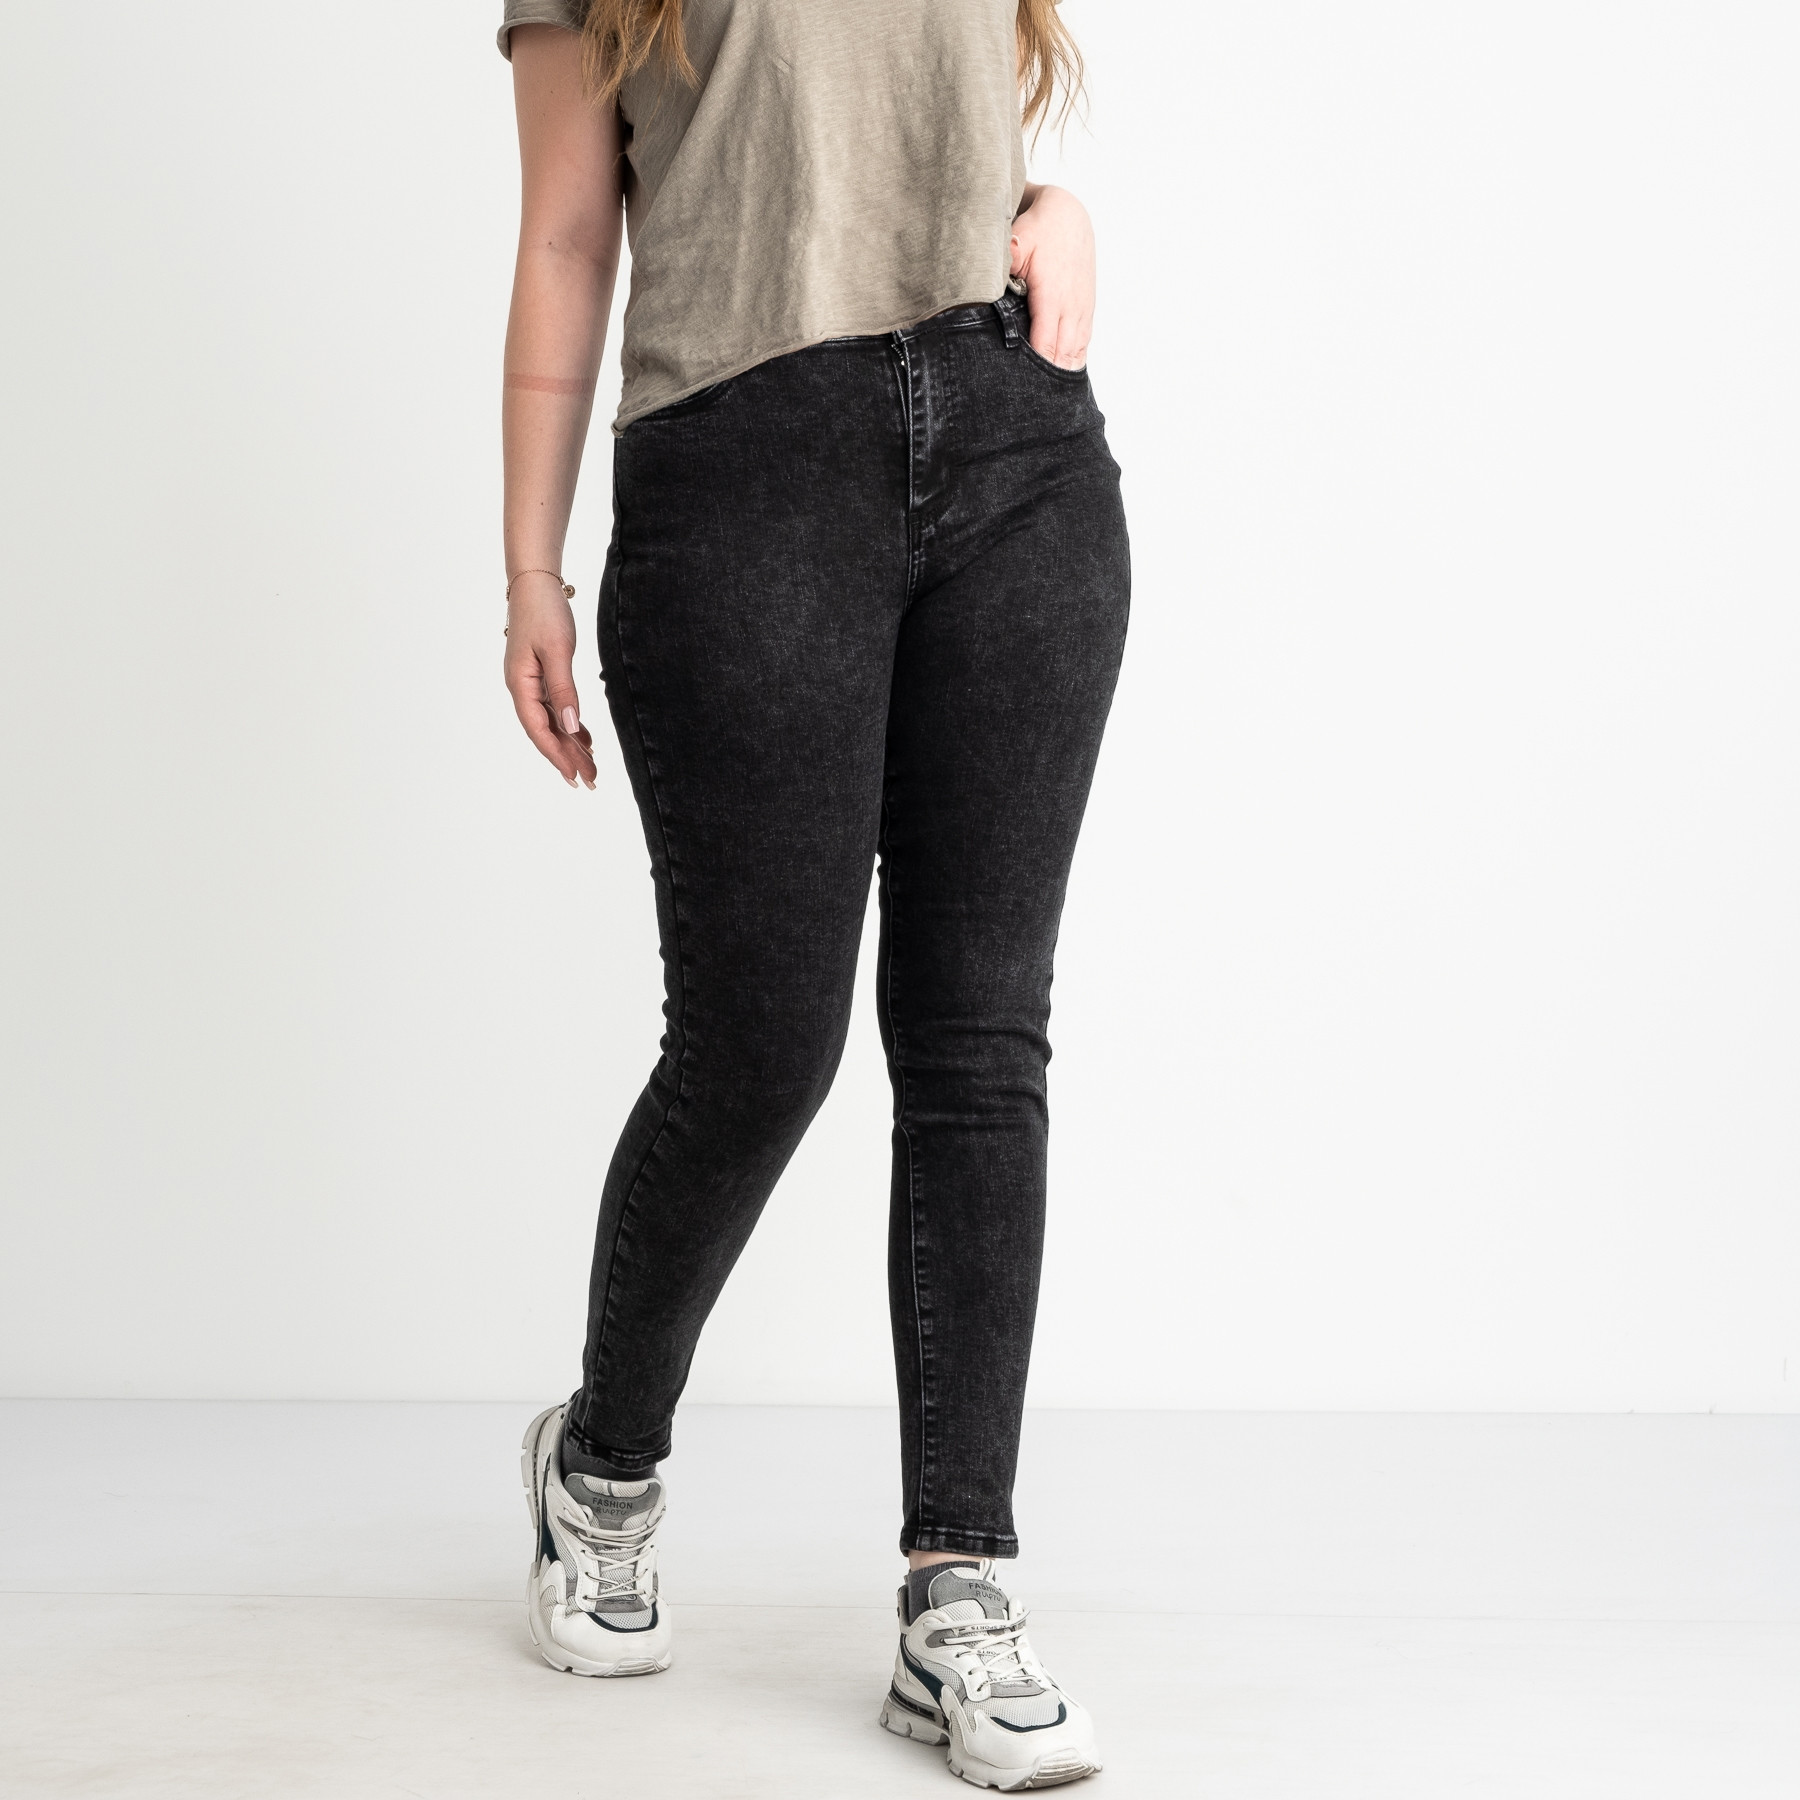 0936 KT.Moss джинсы батальные серые стрейчевые (6 ед. размеры: 31.32.33.34.36.38)